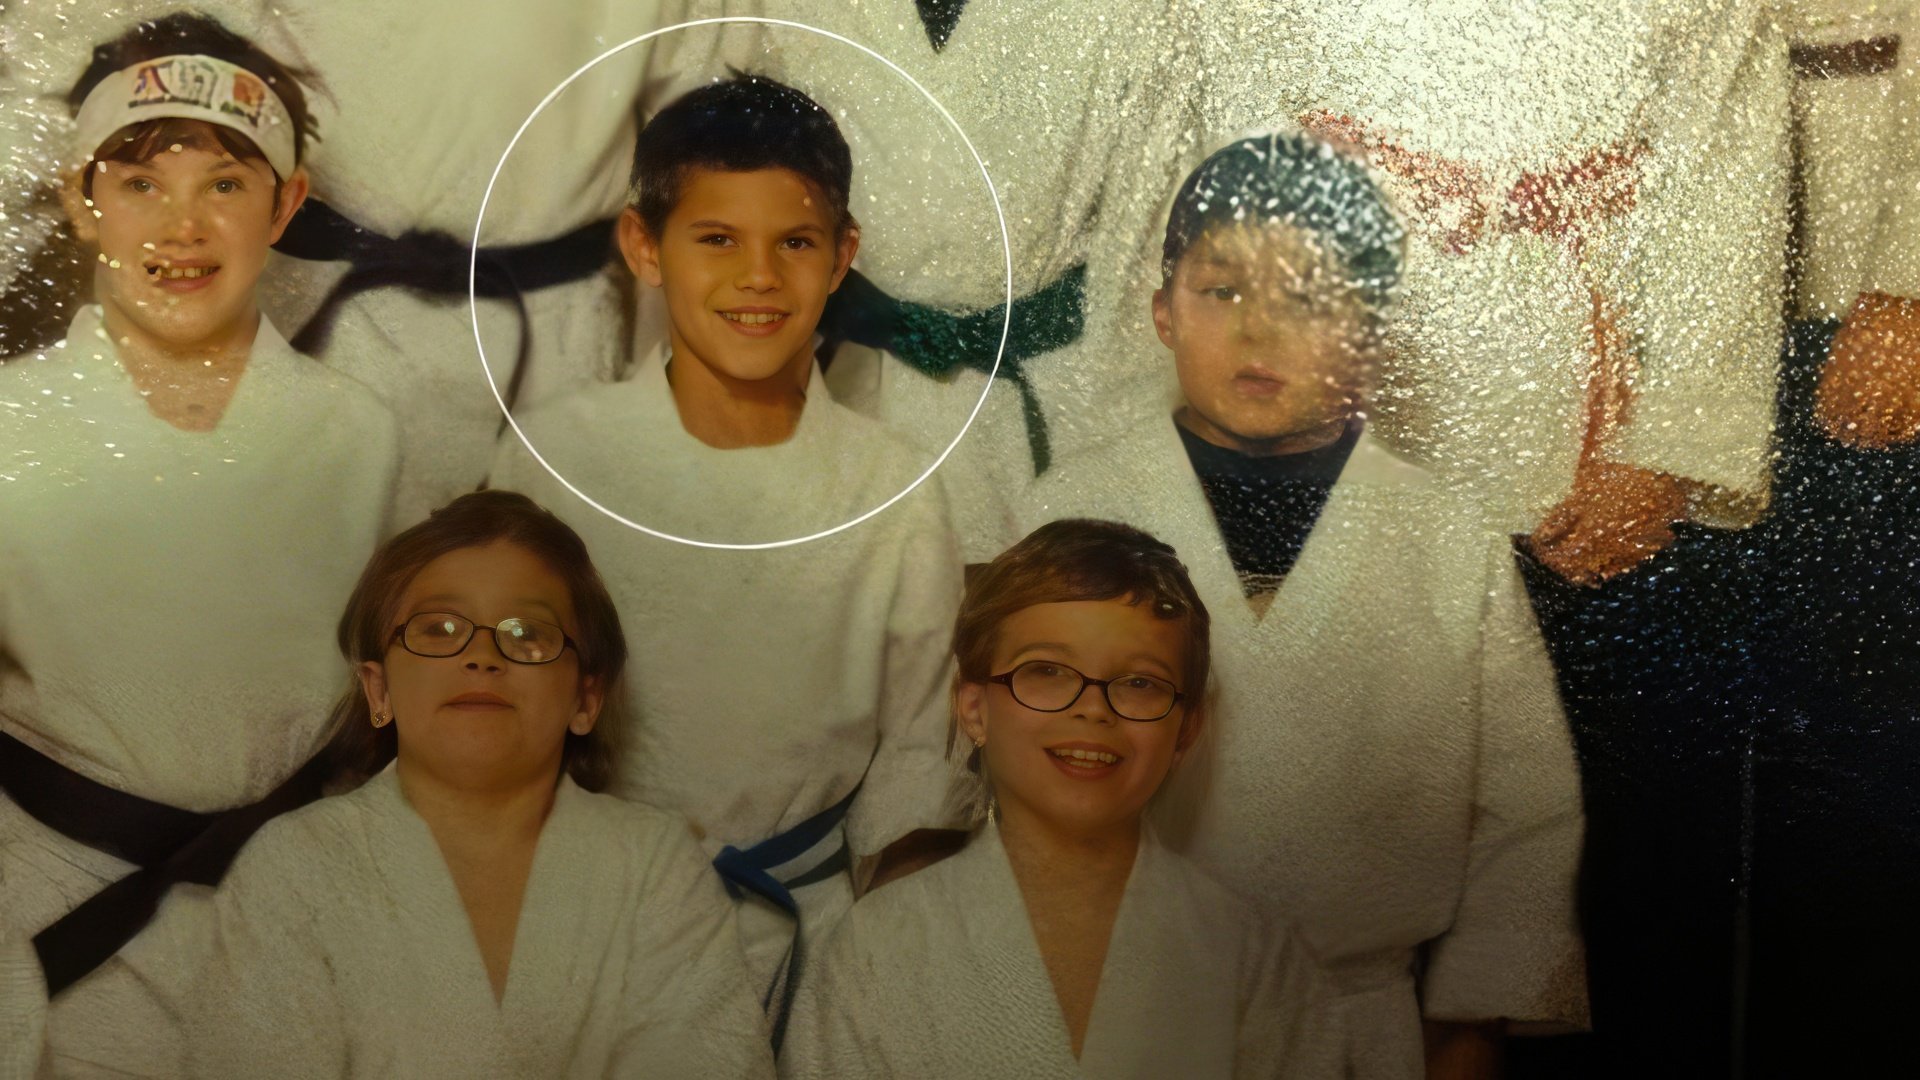 Taylor Lautner has been practicing karate since childhood